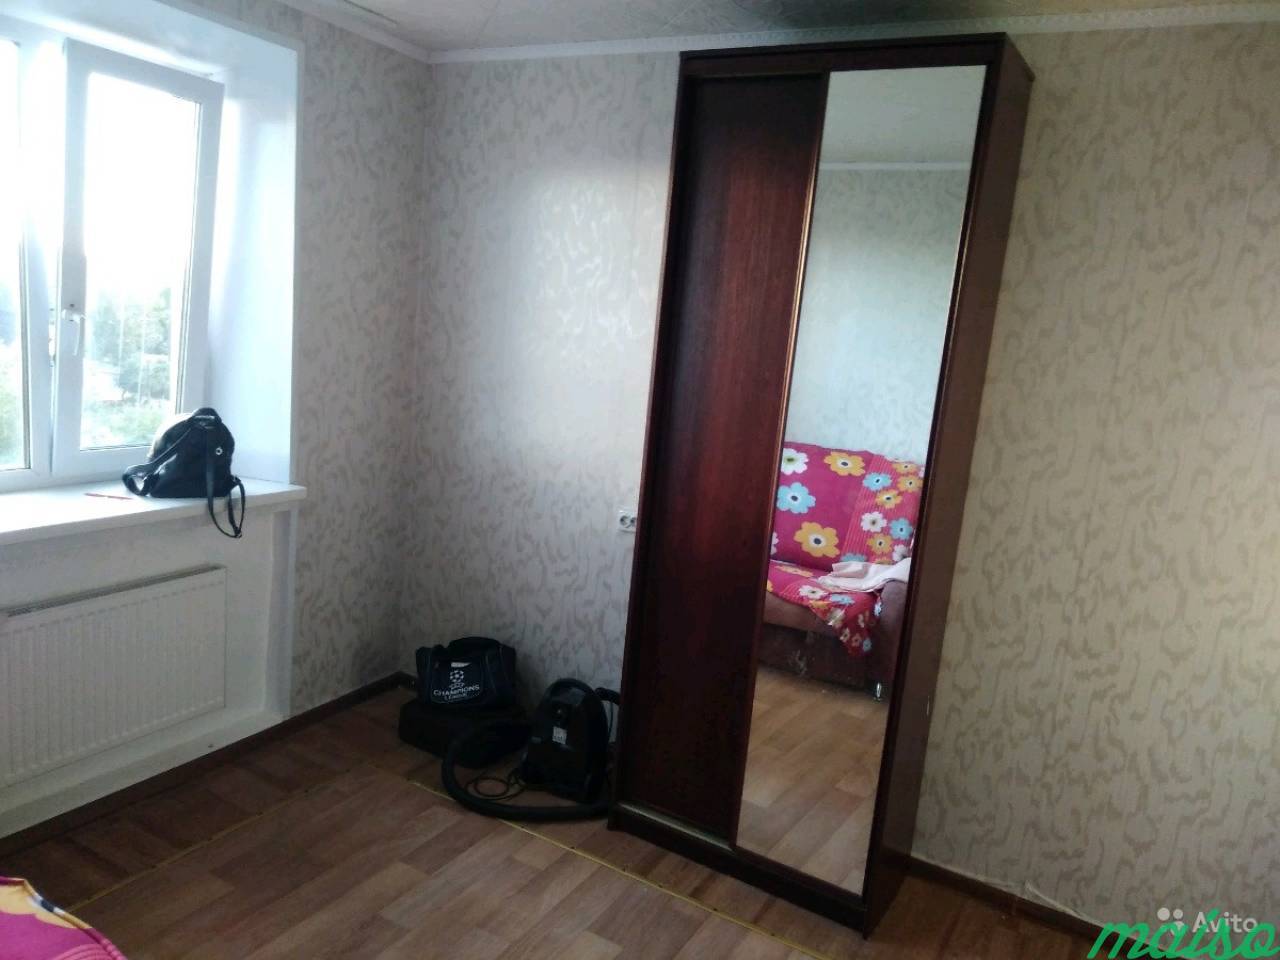 Комната 18.3 м² в >, 9-к, 5/5 эт. в Санкт-Петербурге. Фото 6